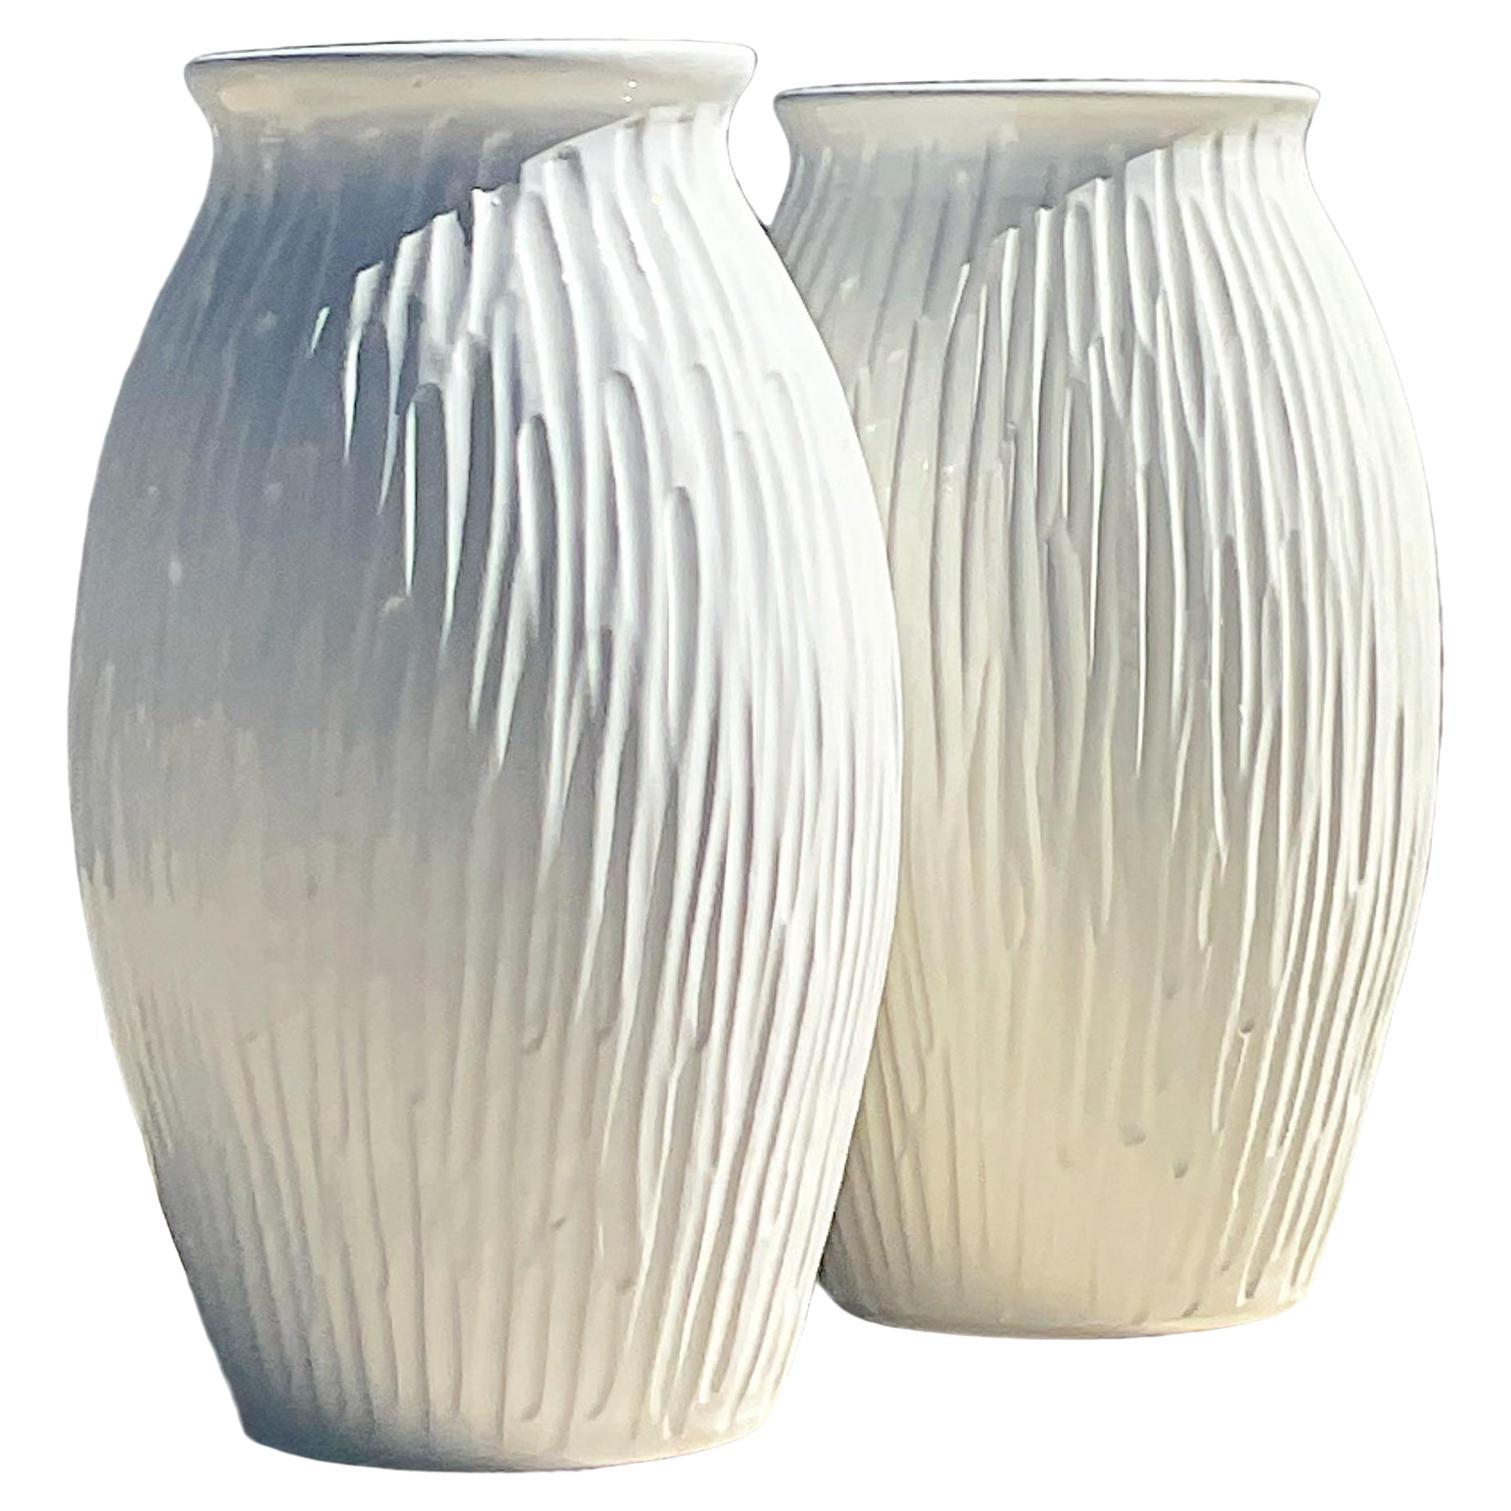 Contemporary Italian White Glazed Ceramic Vases, a Pair